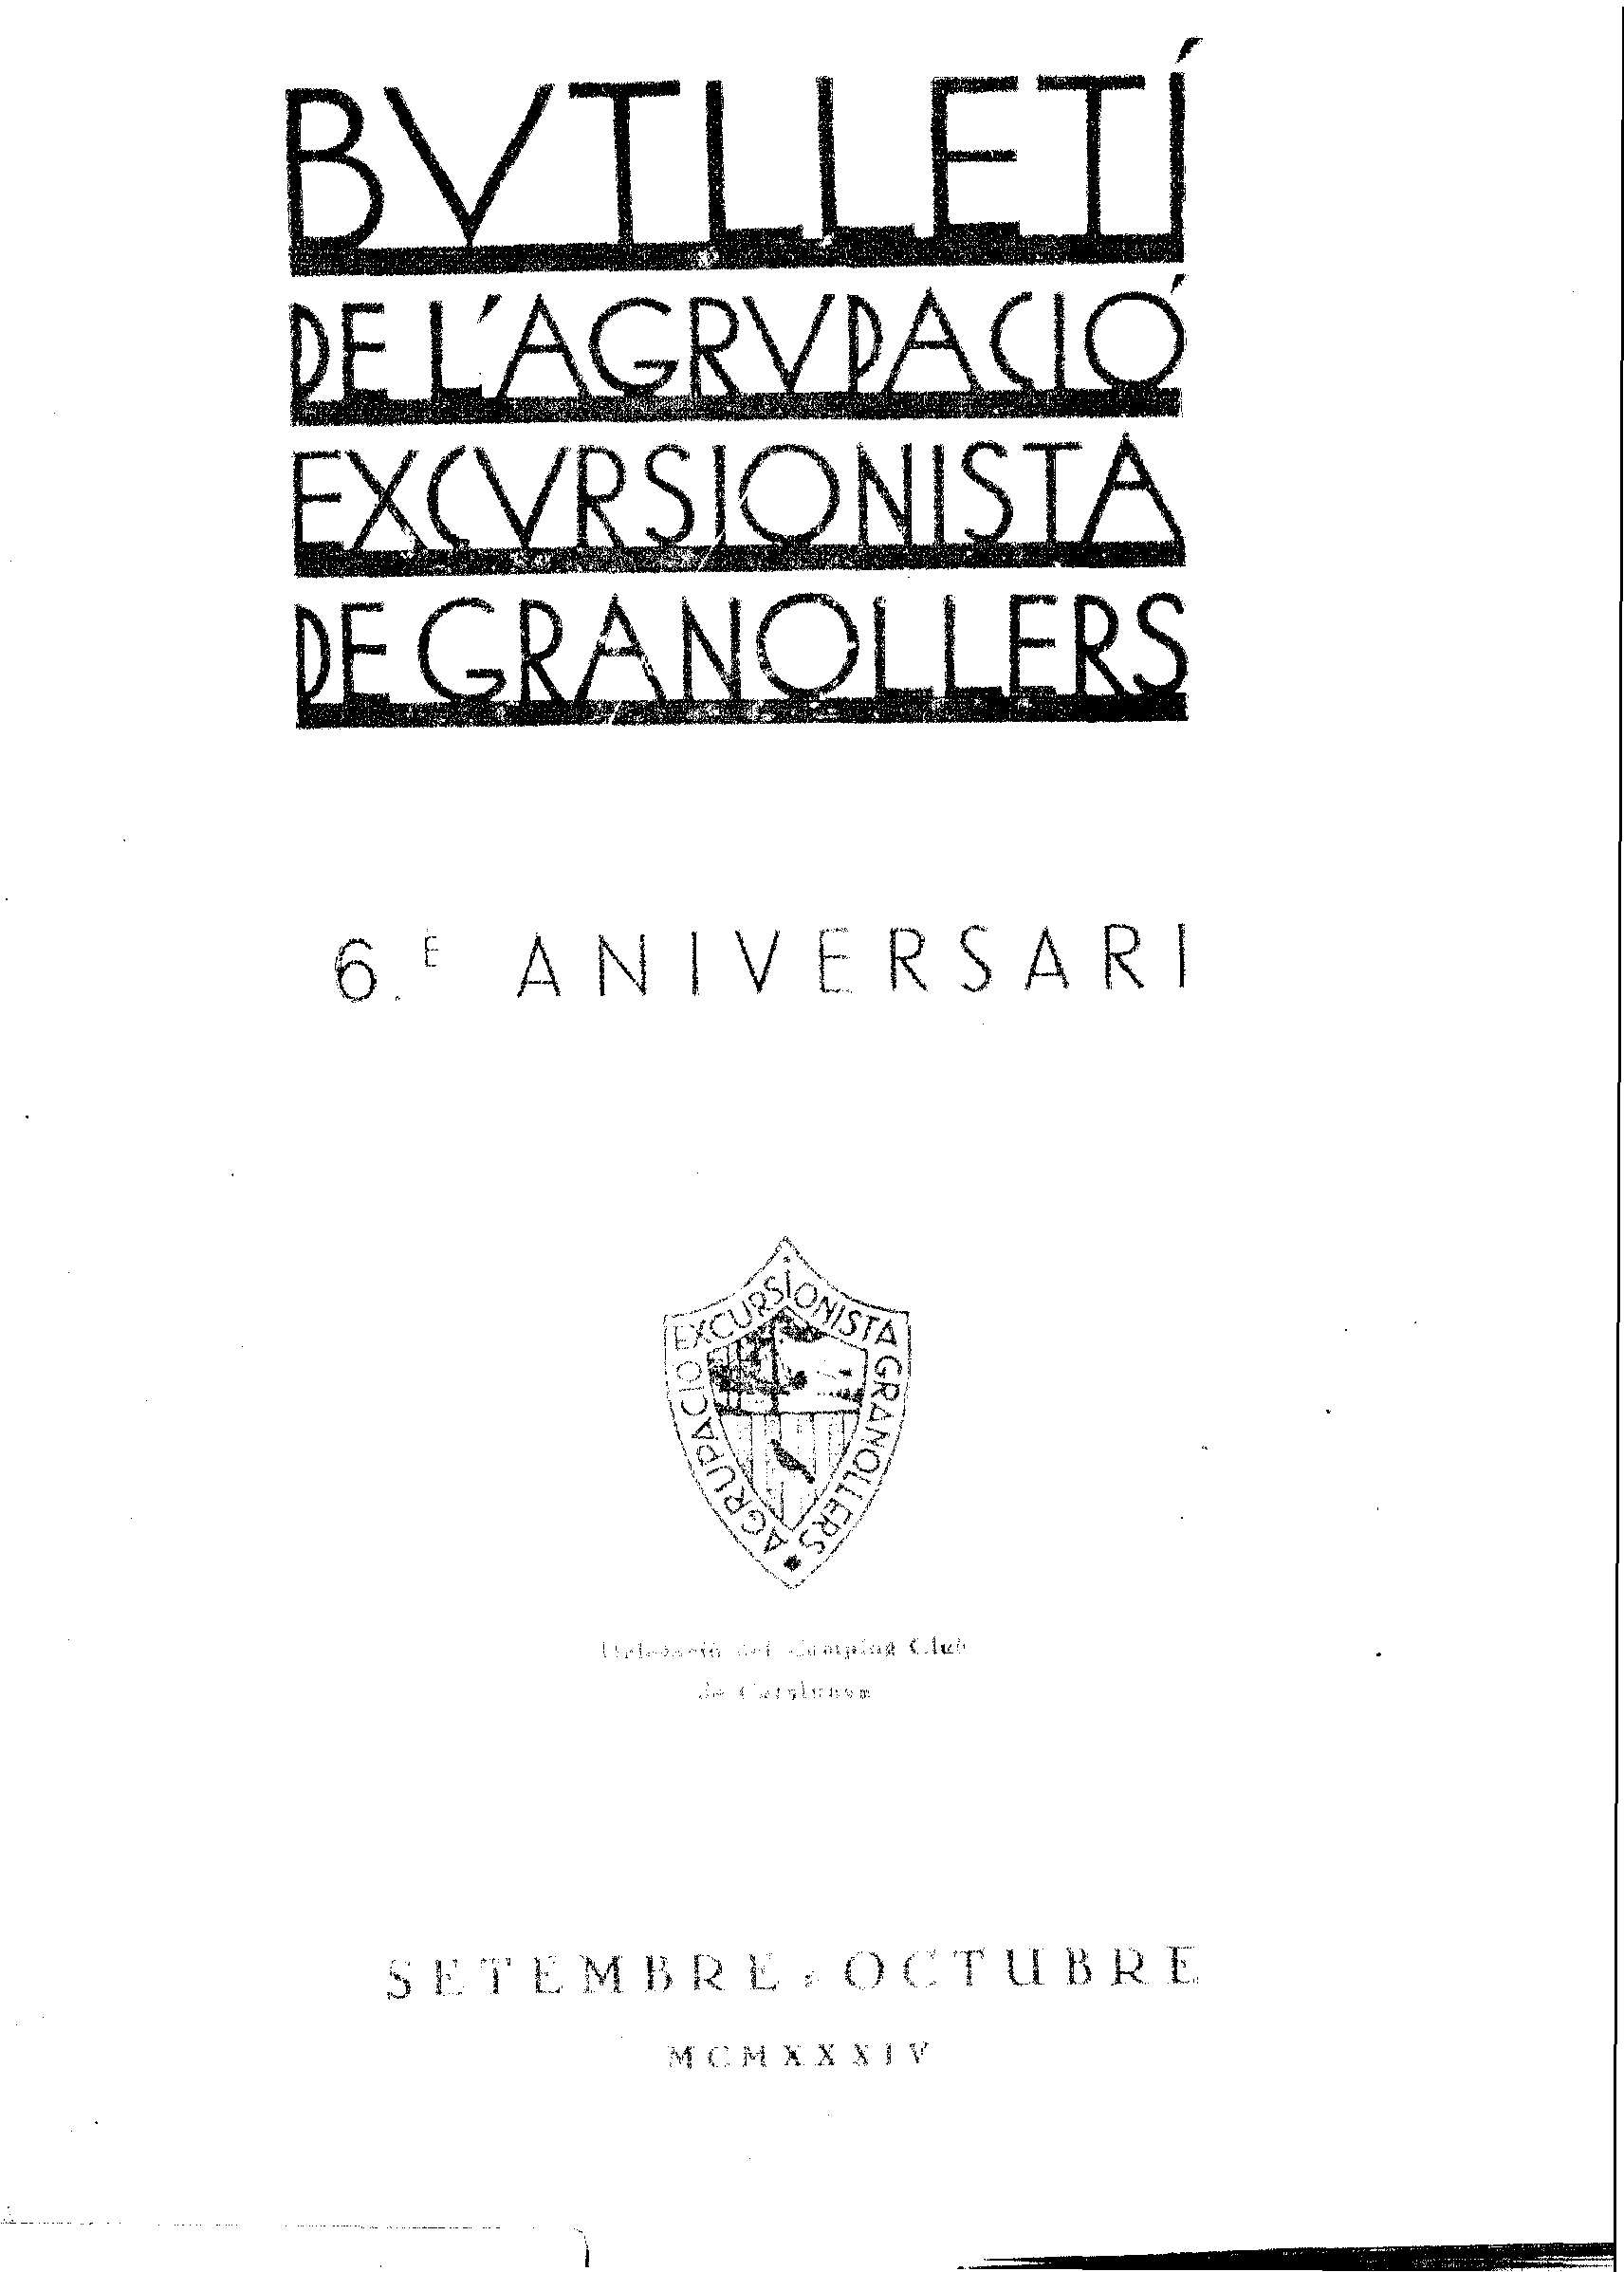 Butlletí de l'Agrupació Excursionista de Granollers, 1/9/1934 [Issue]